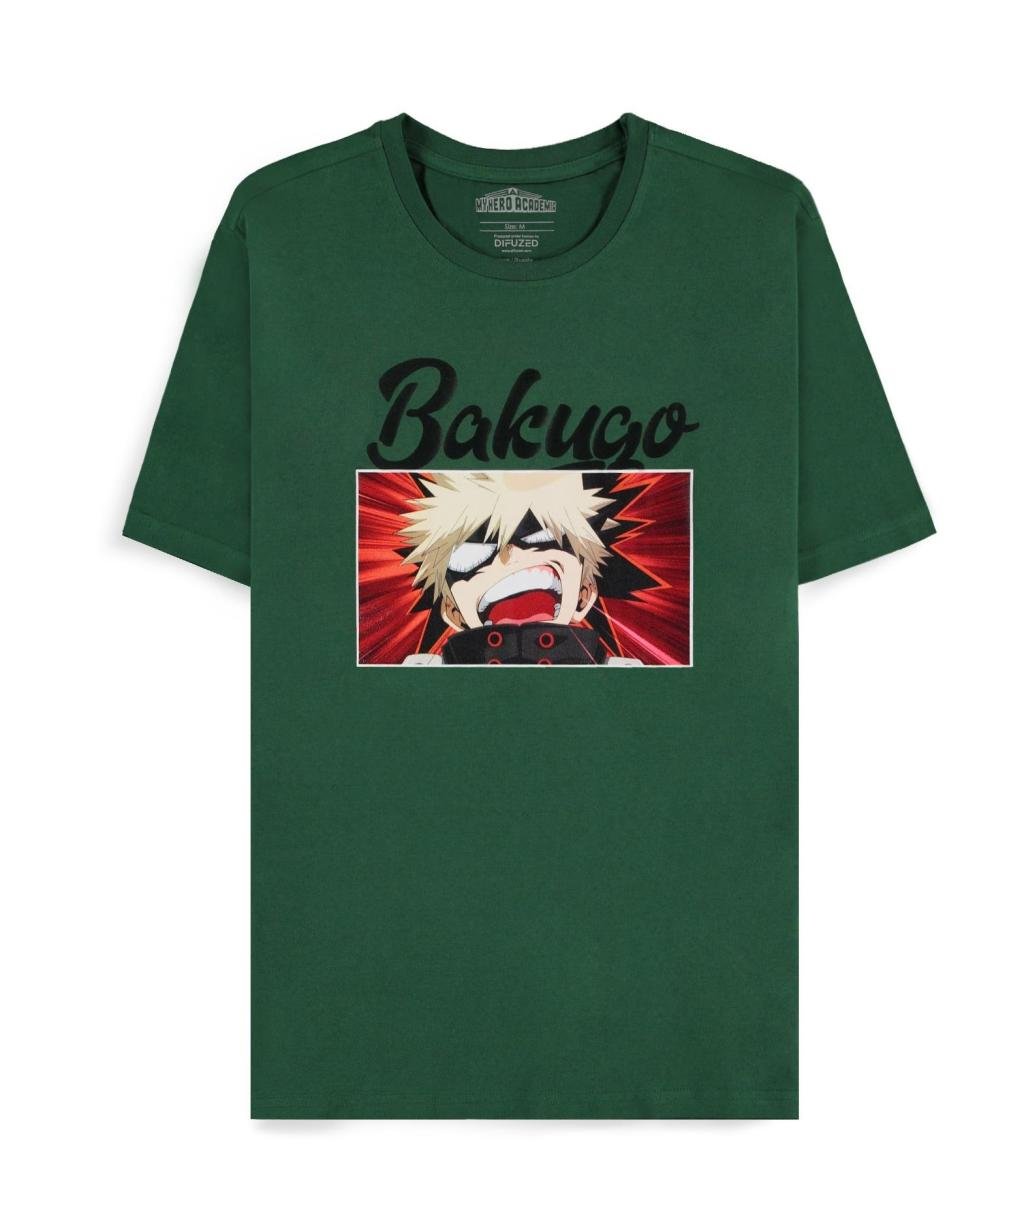 MY HERO ACADEMIA - Green Bakugo - Men's T-shirt (L)